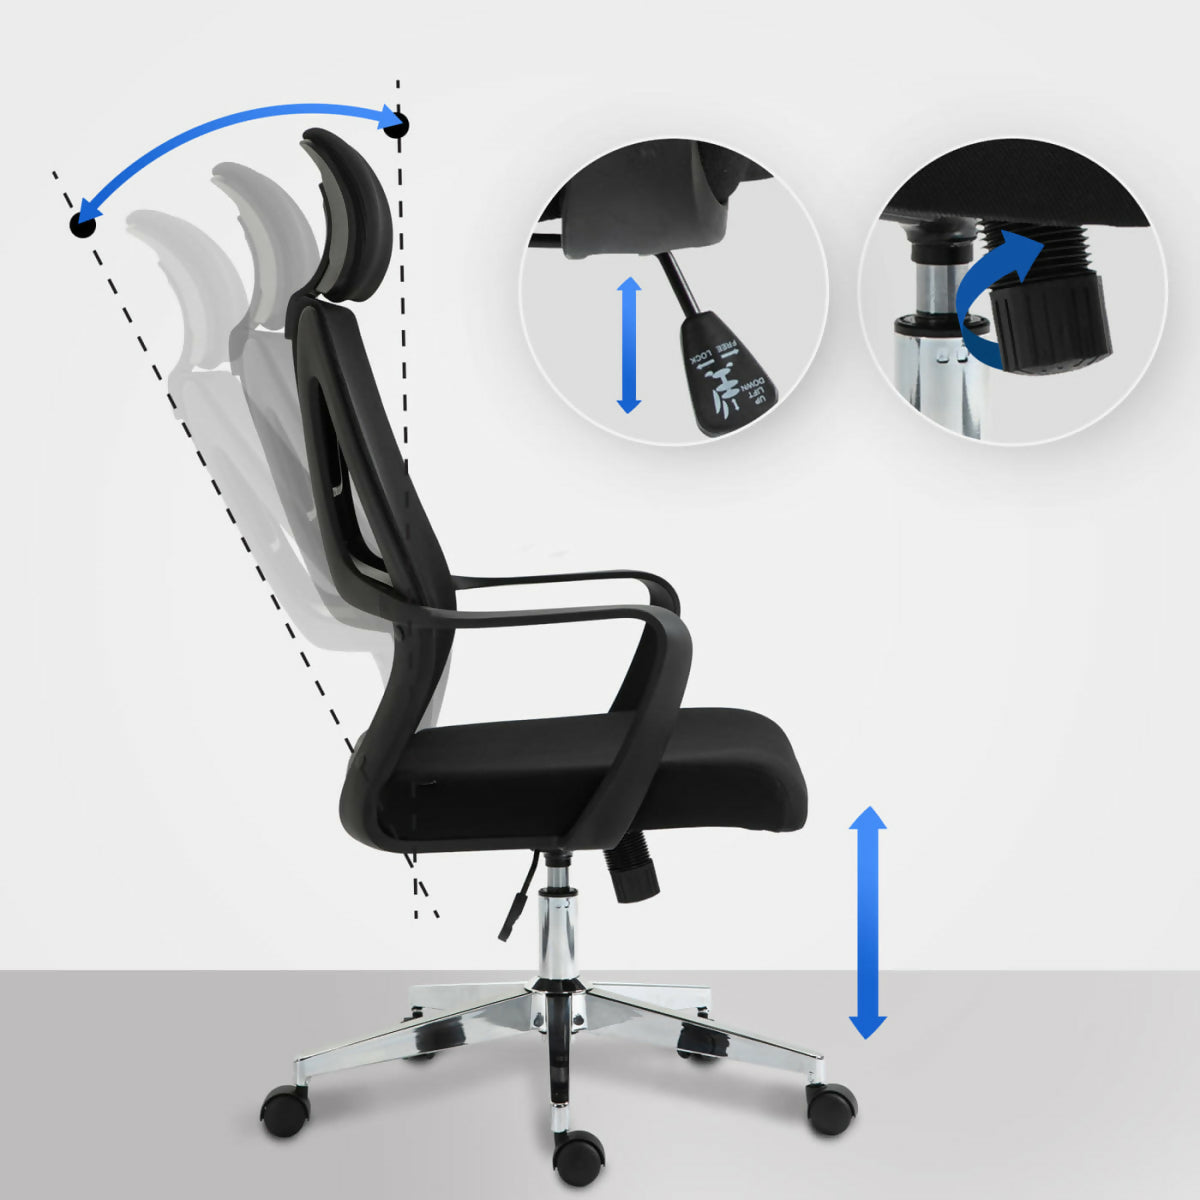 Kanab office chair - Black fabric - 0